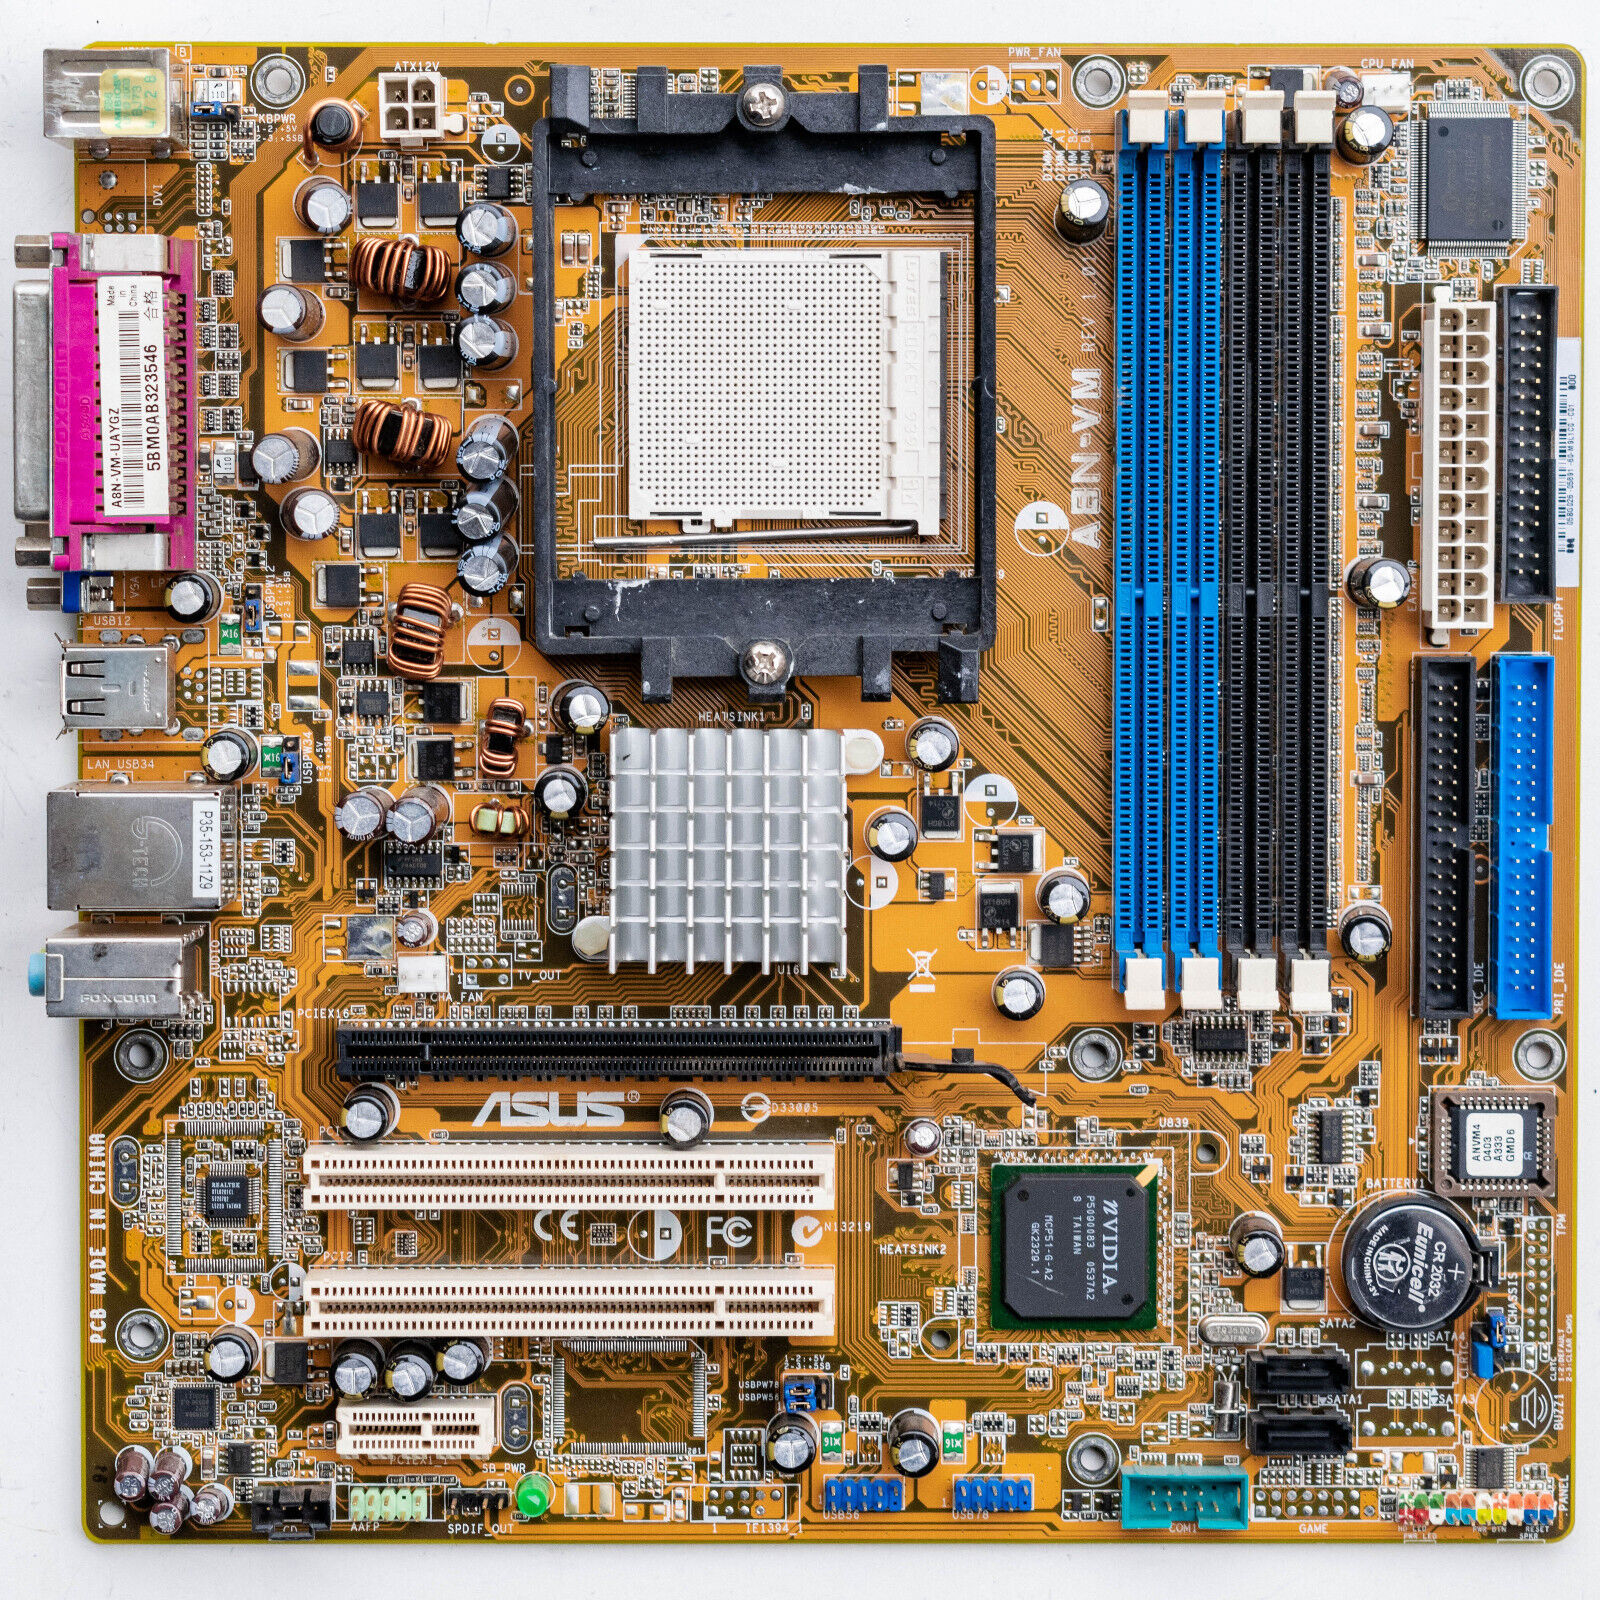 Asus A8N-VM Socket 939 Motherboard microATX DDR AMD Athlon 64 Support NEW CAPS